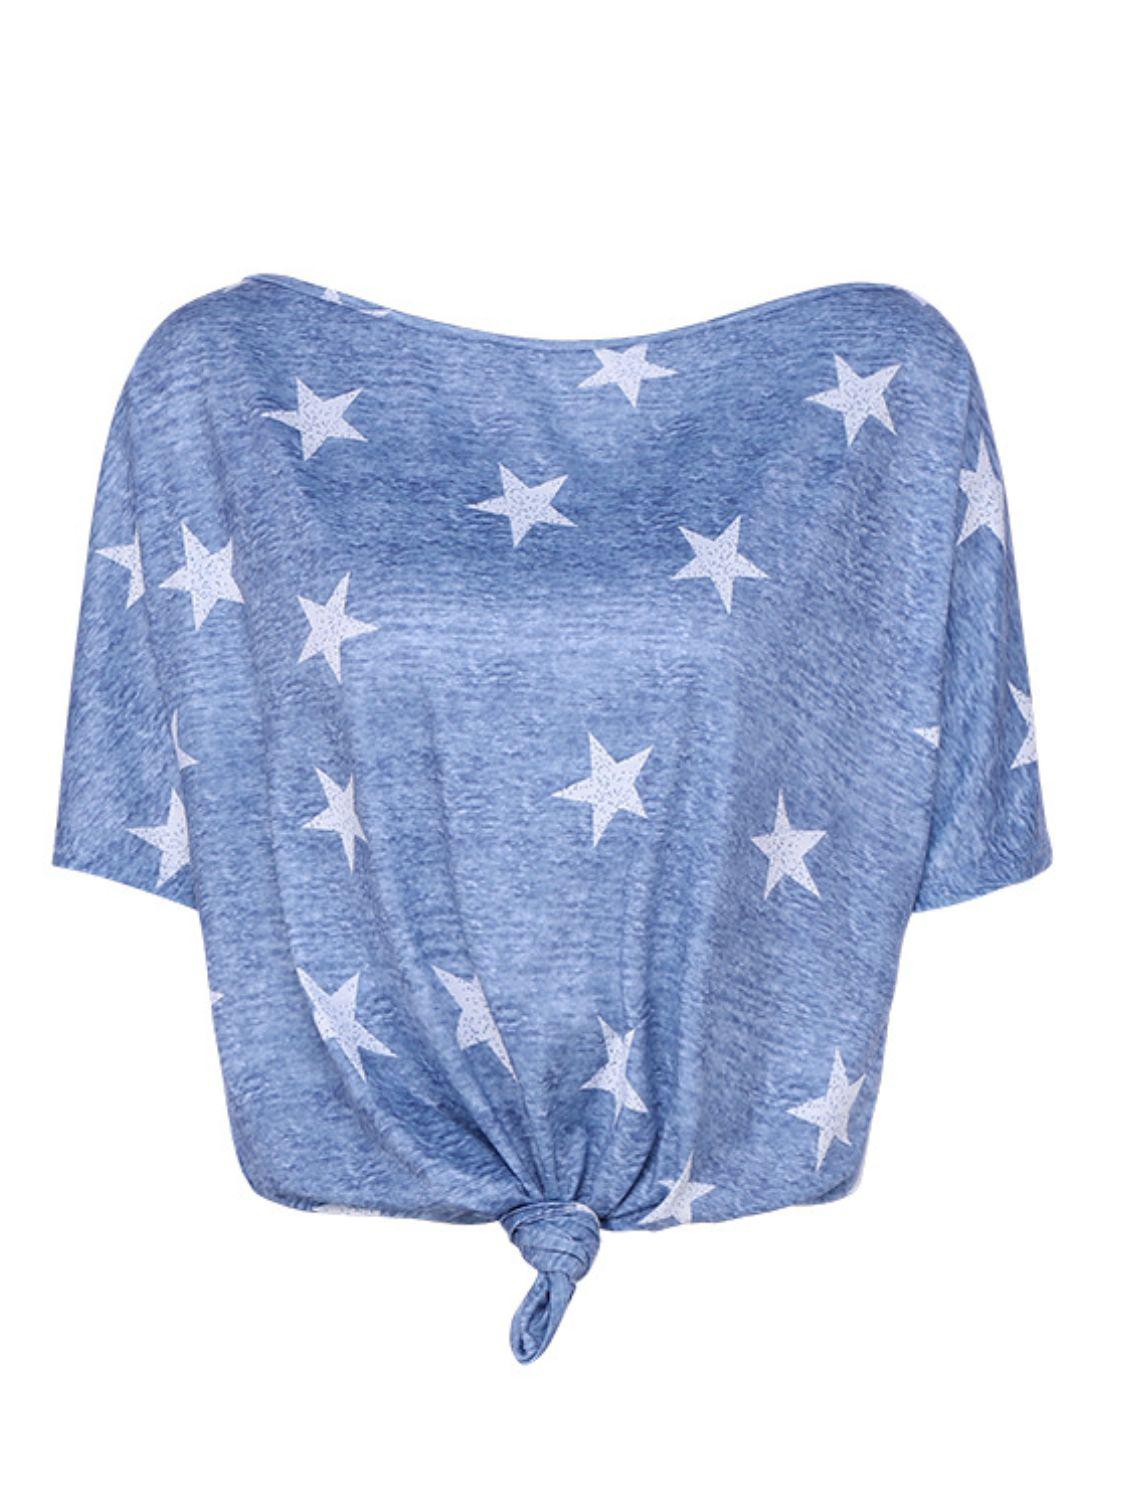 Star Print Short Sleeve T-Shirt BLUE ZONE PLANET